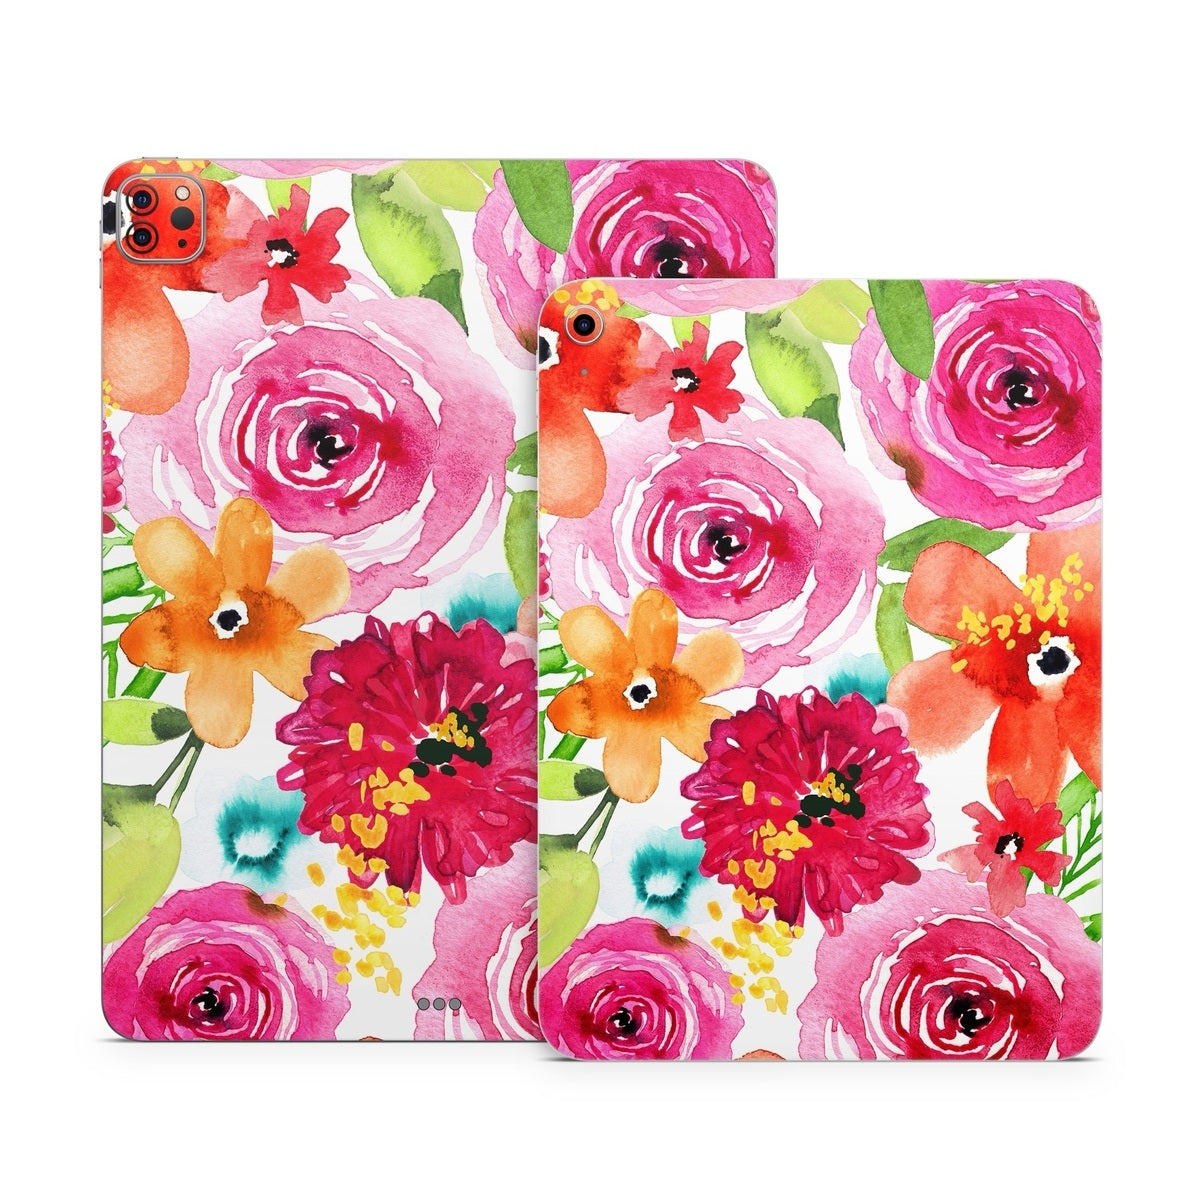 Floral Pop - Apple iPad Skin